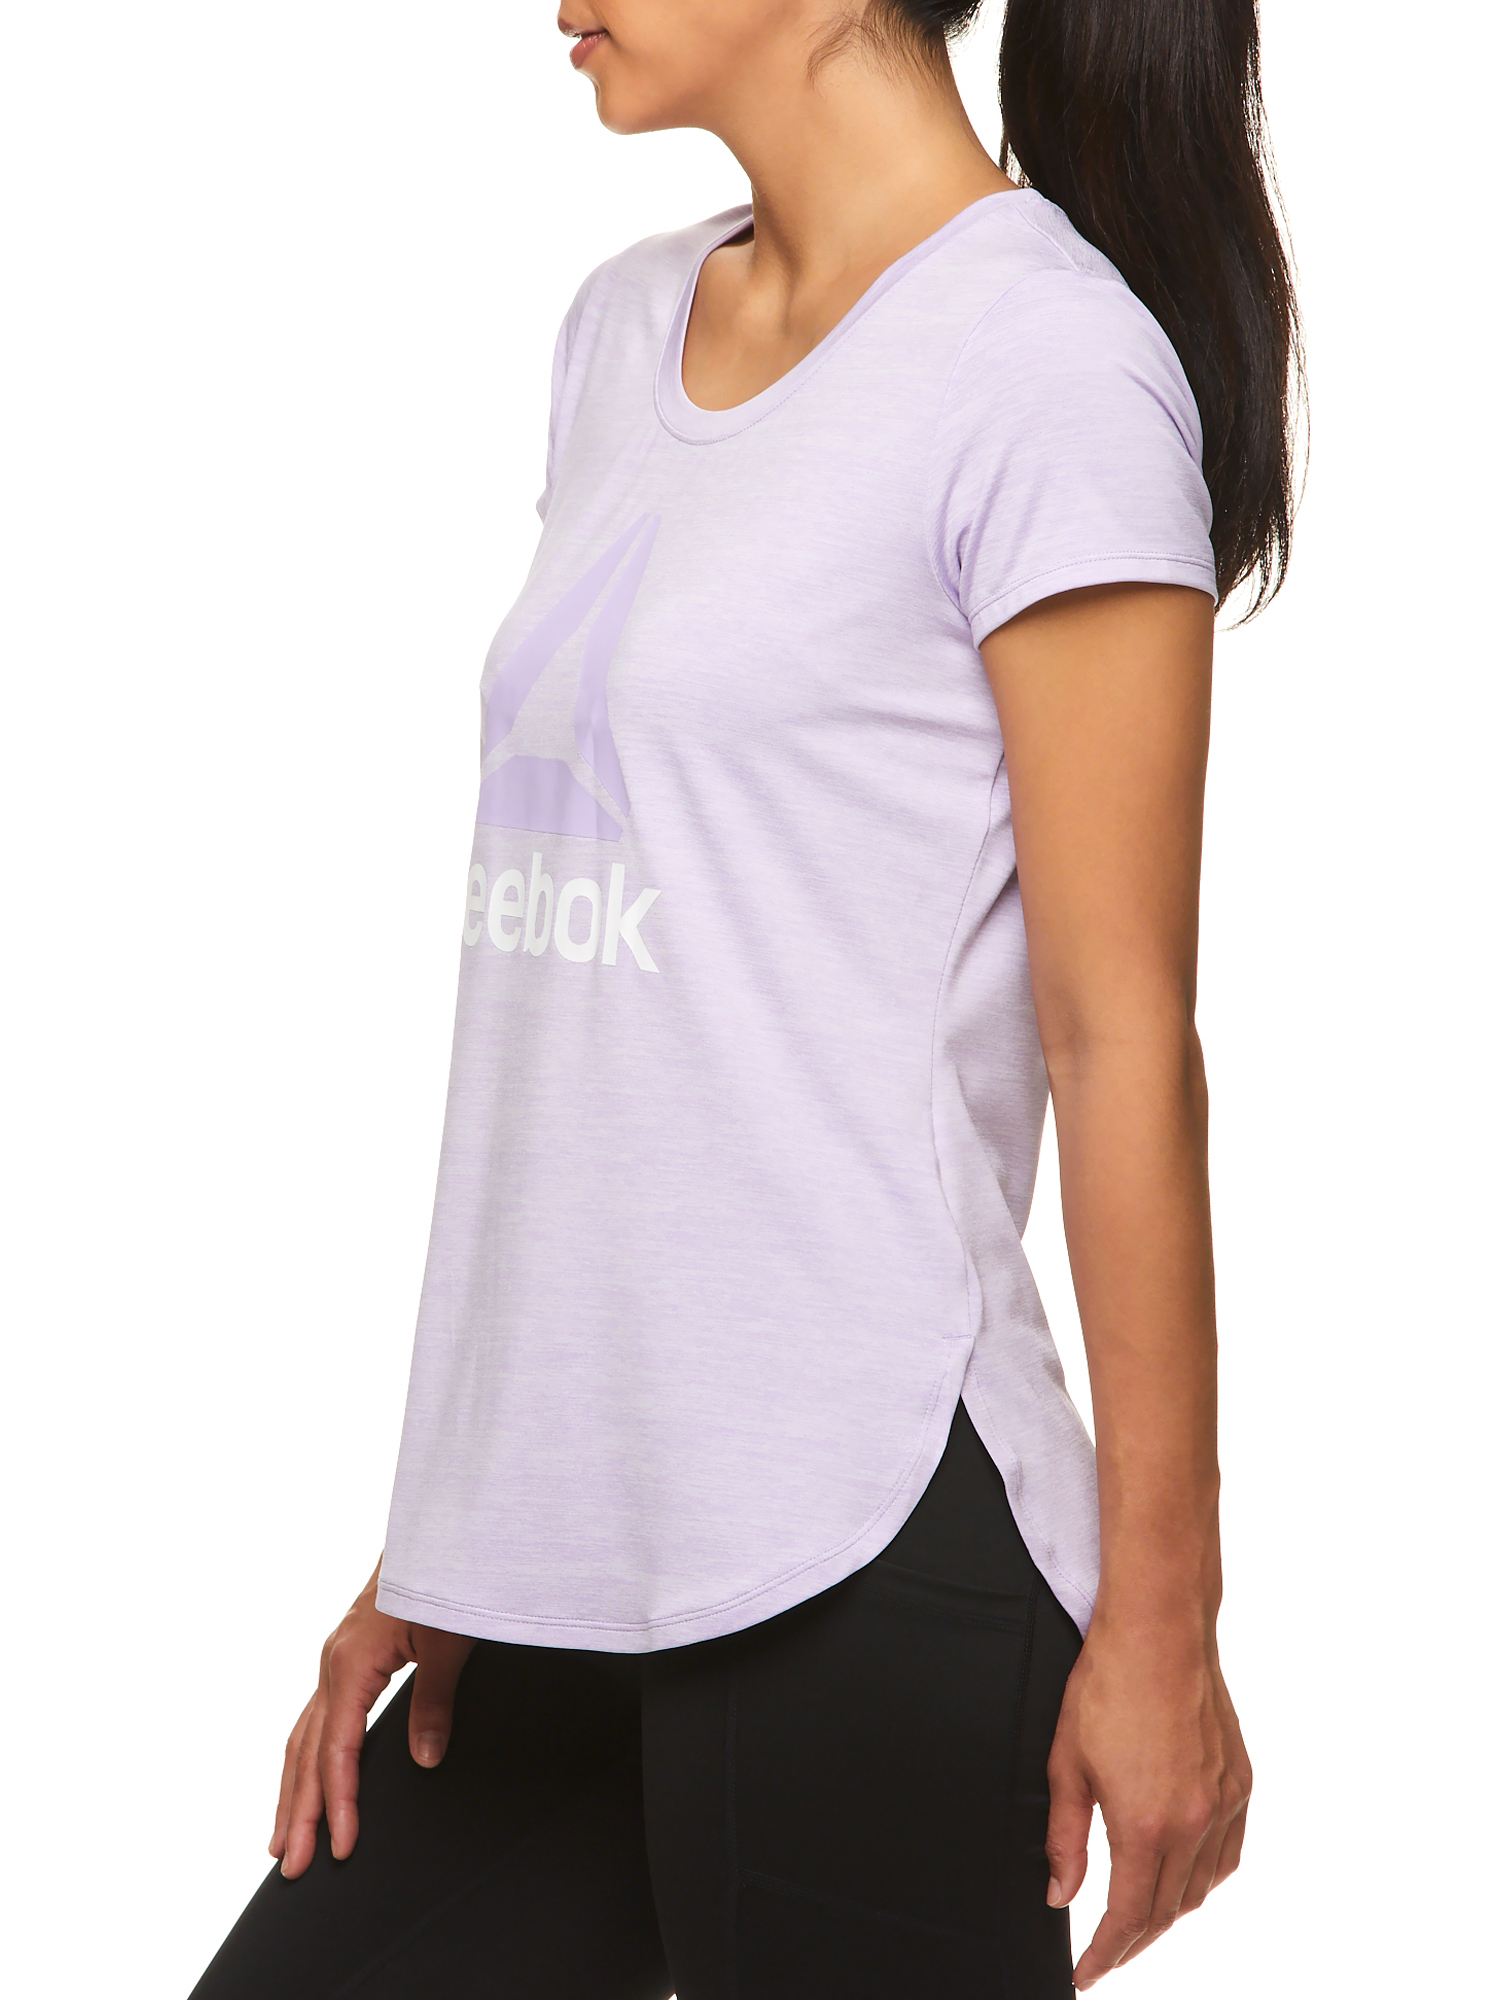 Reebok Women's Graphic Short Sleeve T-Shirt - image 4 of 4